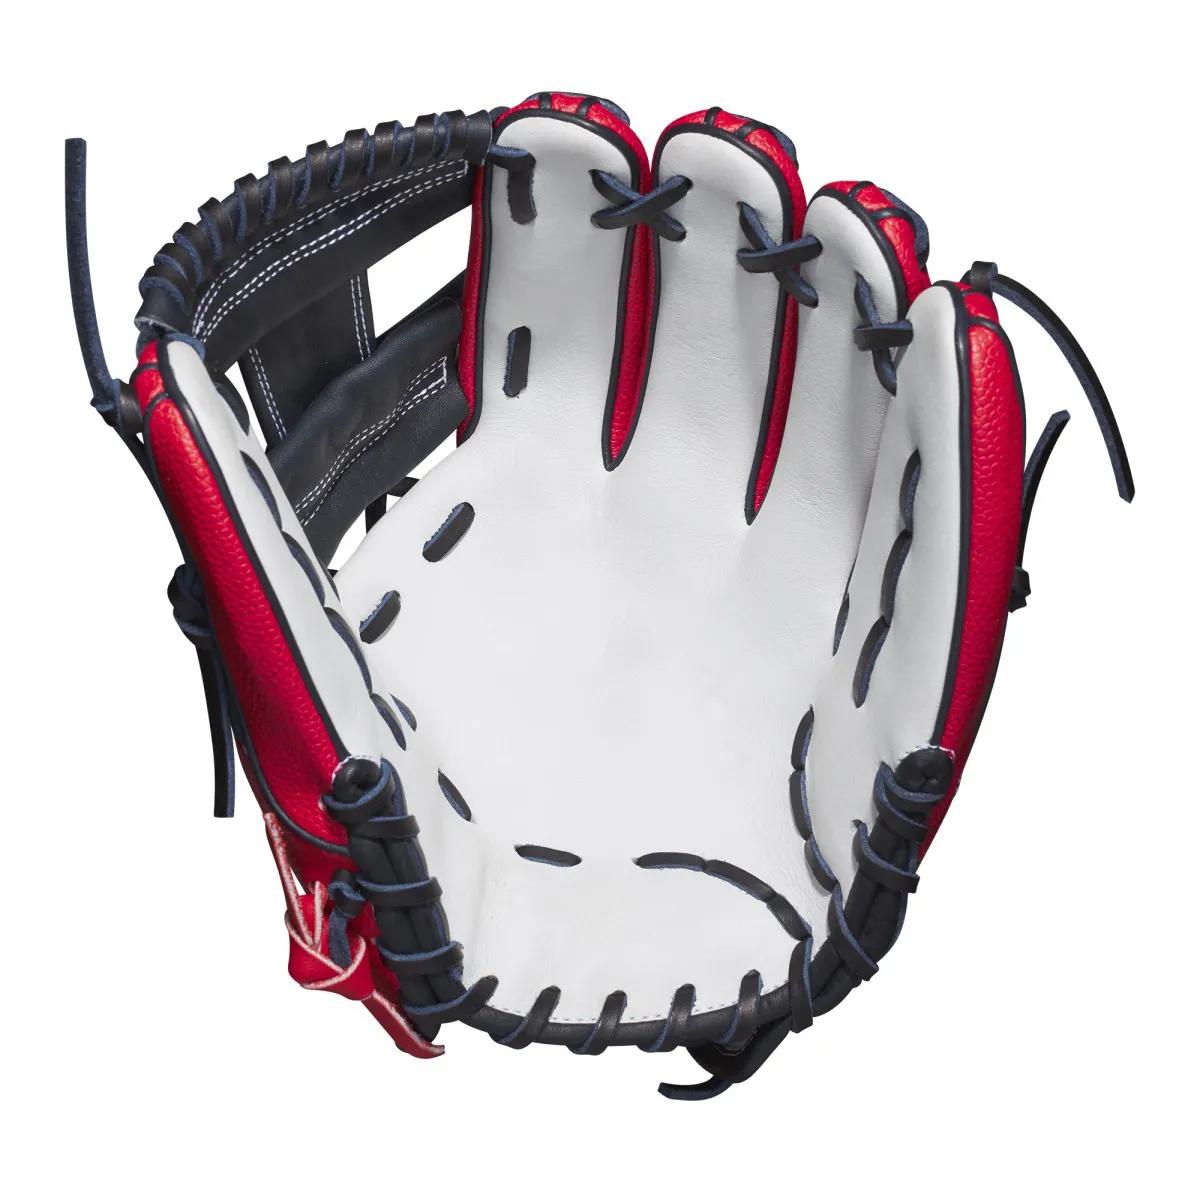 Großhandel benutzer definierte japanische Kip Leder Baseball Handschuh Handschuhe Pflege Fledermaus Wrap Guante De Beisbol